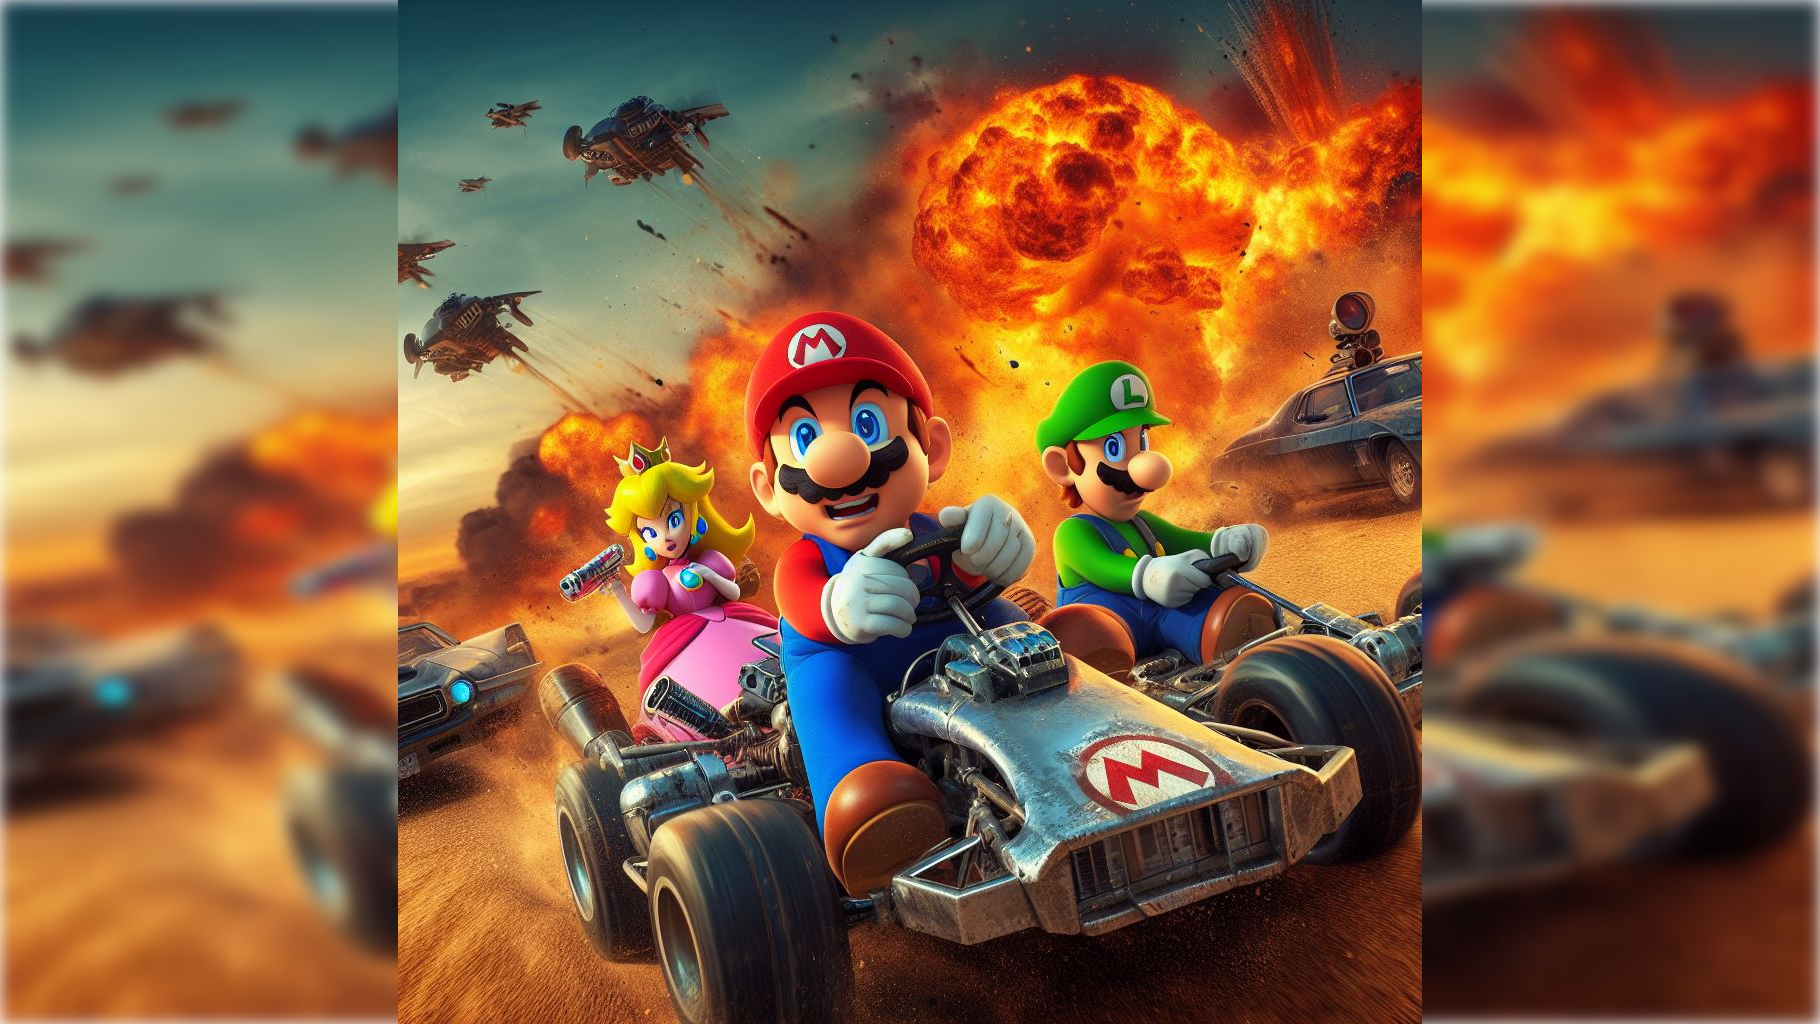 Mario Kart Mad Max Fury Road by Bing Image Creator